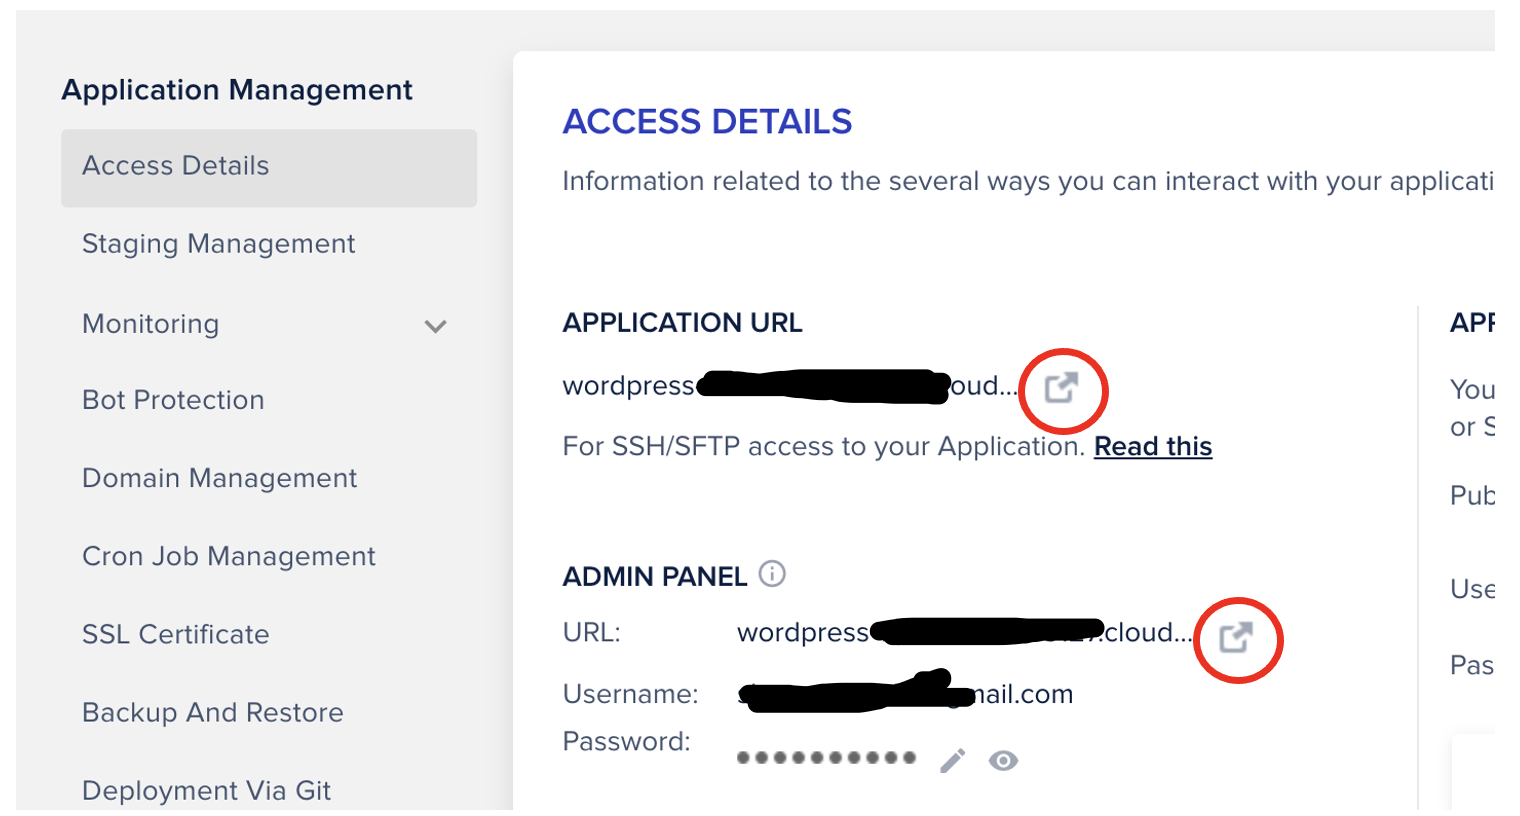 Application을 클릭하고 Access Details을 선택하면 나타나는 화면. 워드프레스 sample page와 로그인 페이지로 이동하는 링크가 빨간 원으로 표시되어 있다.